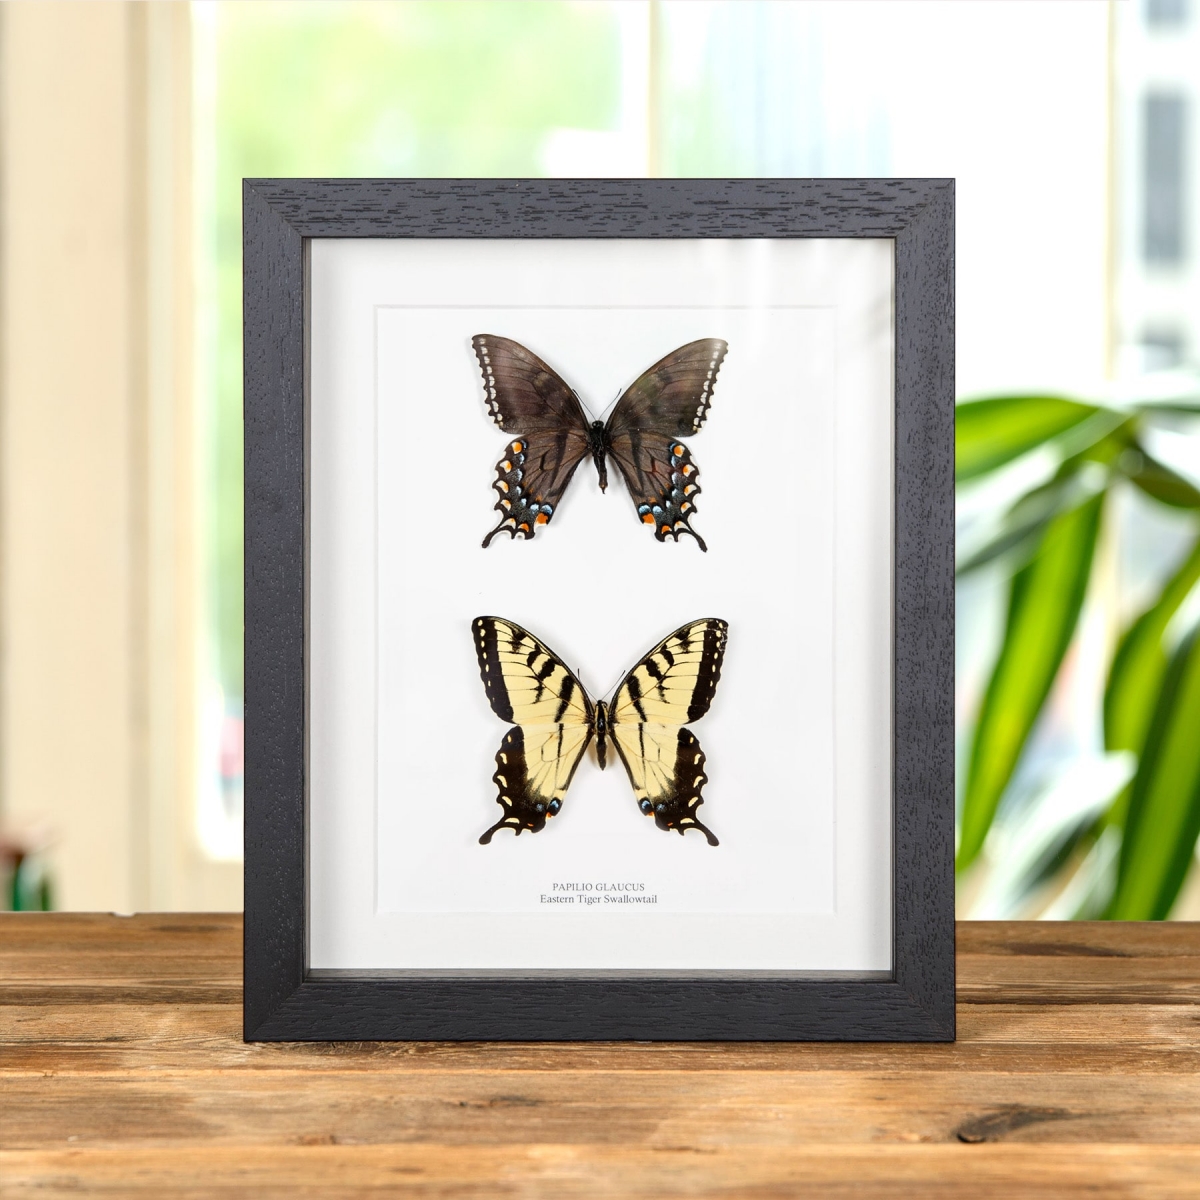 female eastern tiger swallowtail butterfly